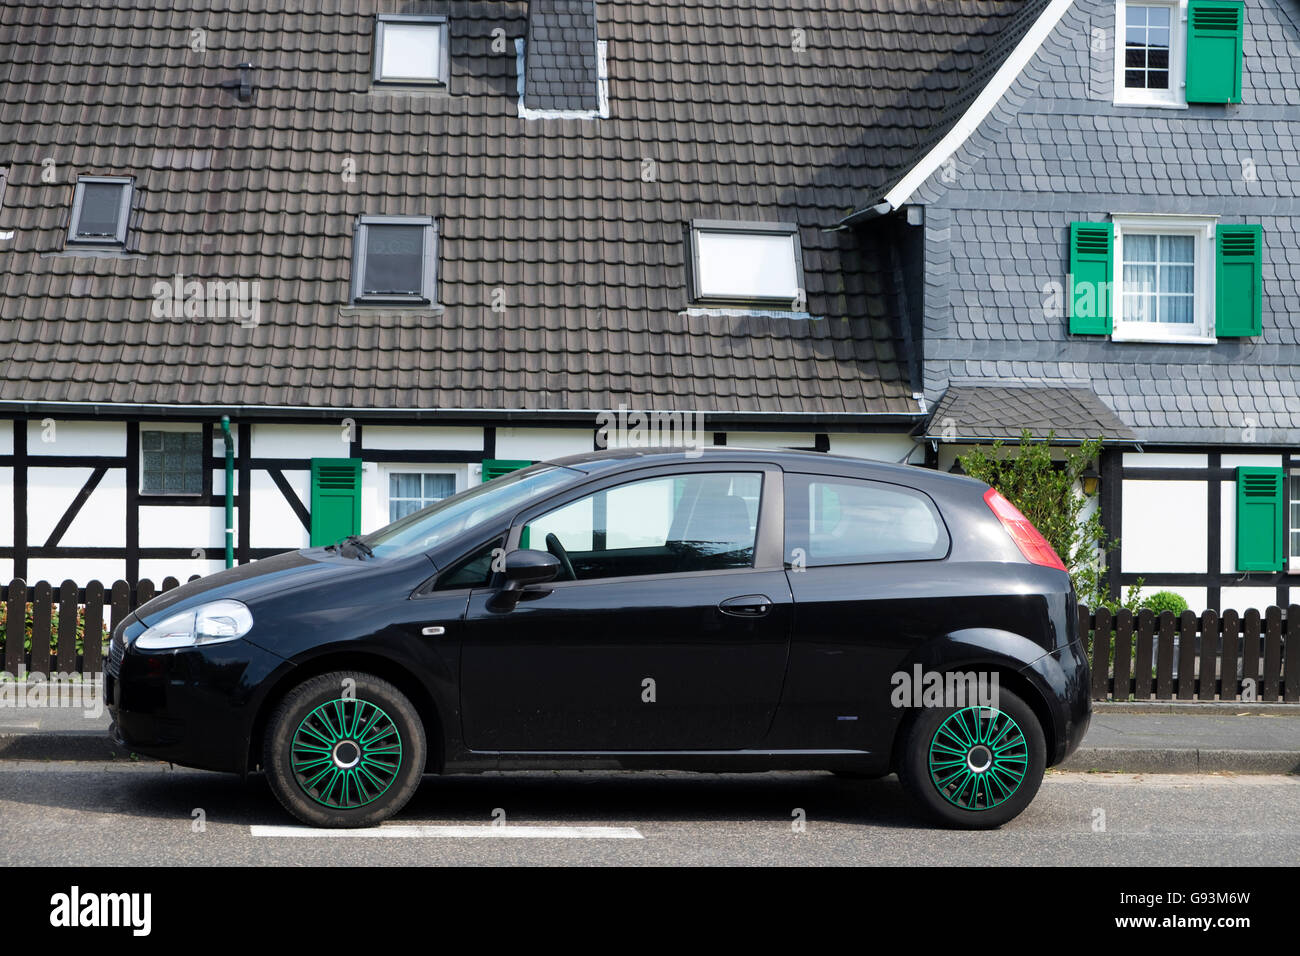 Fiat Bravo car with green wheels Stock Photo